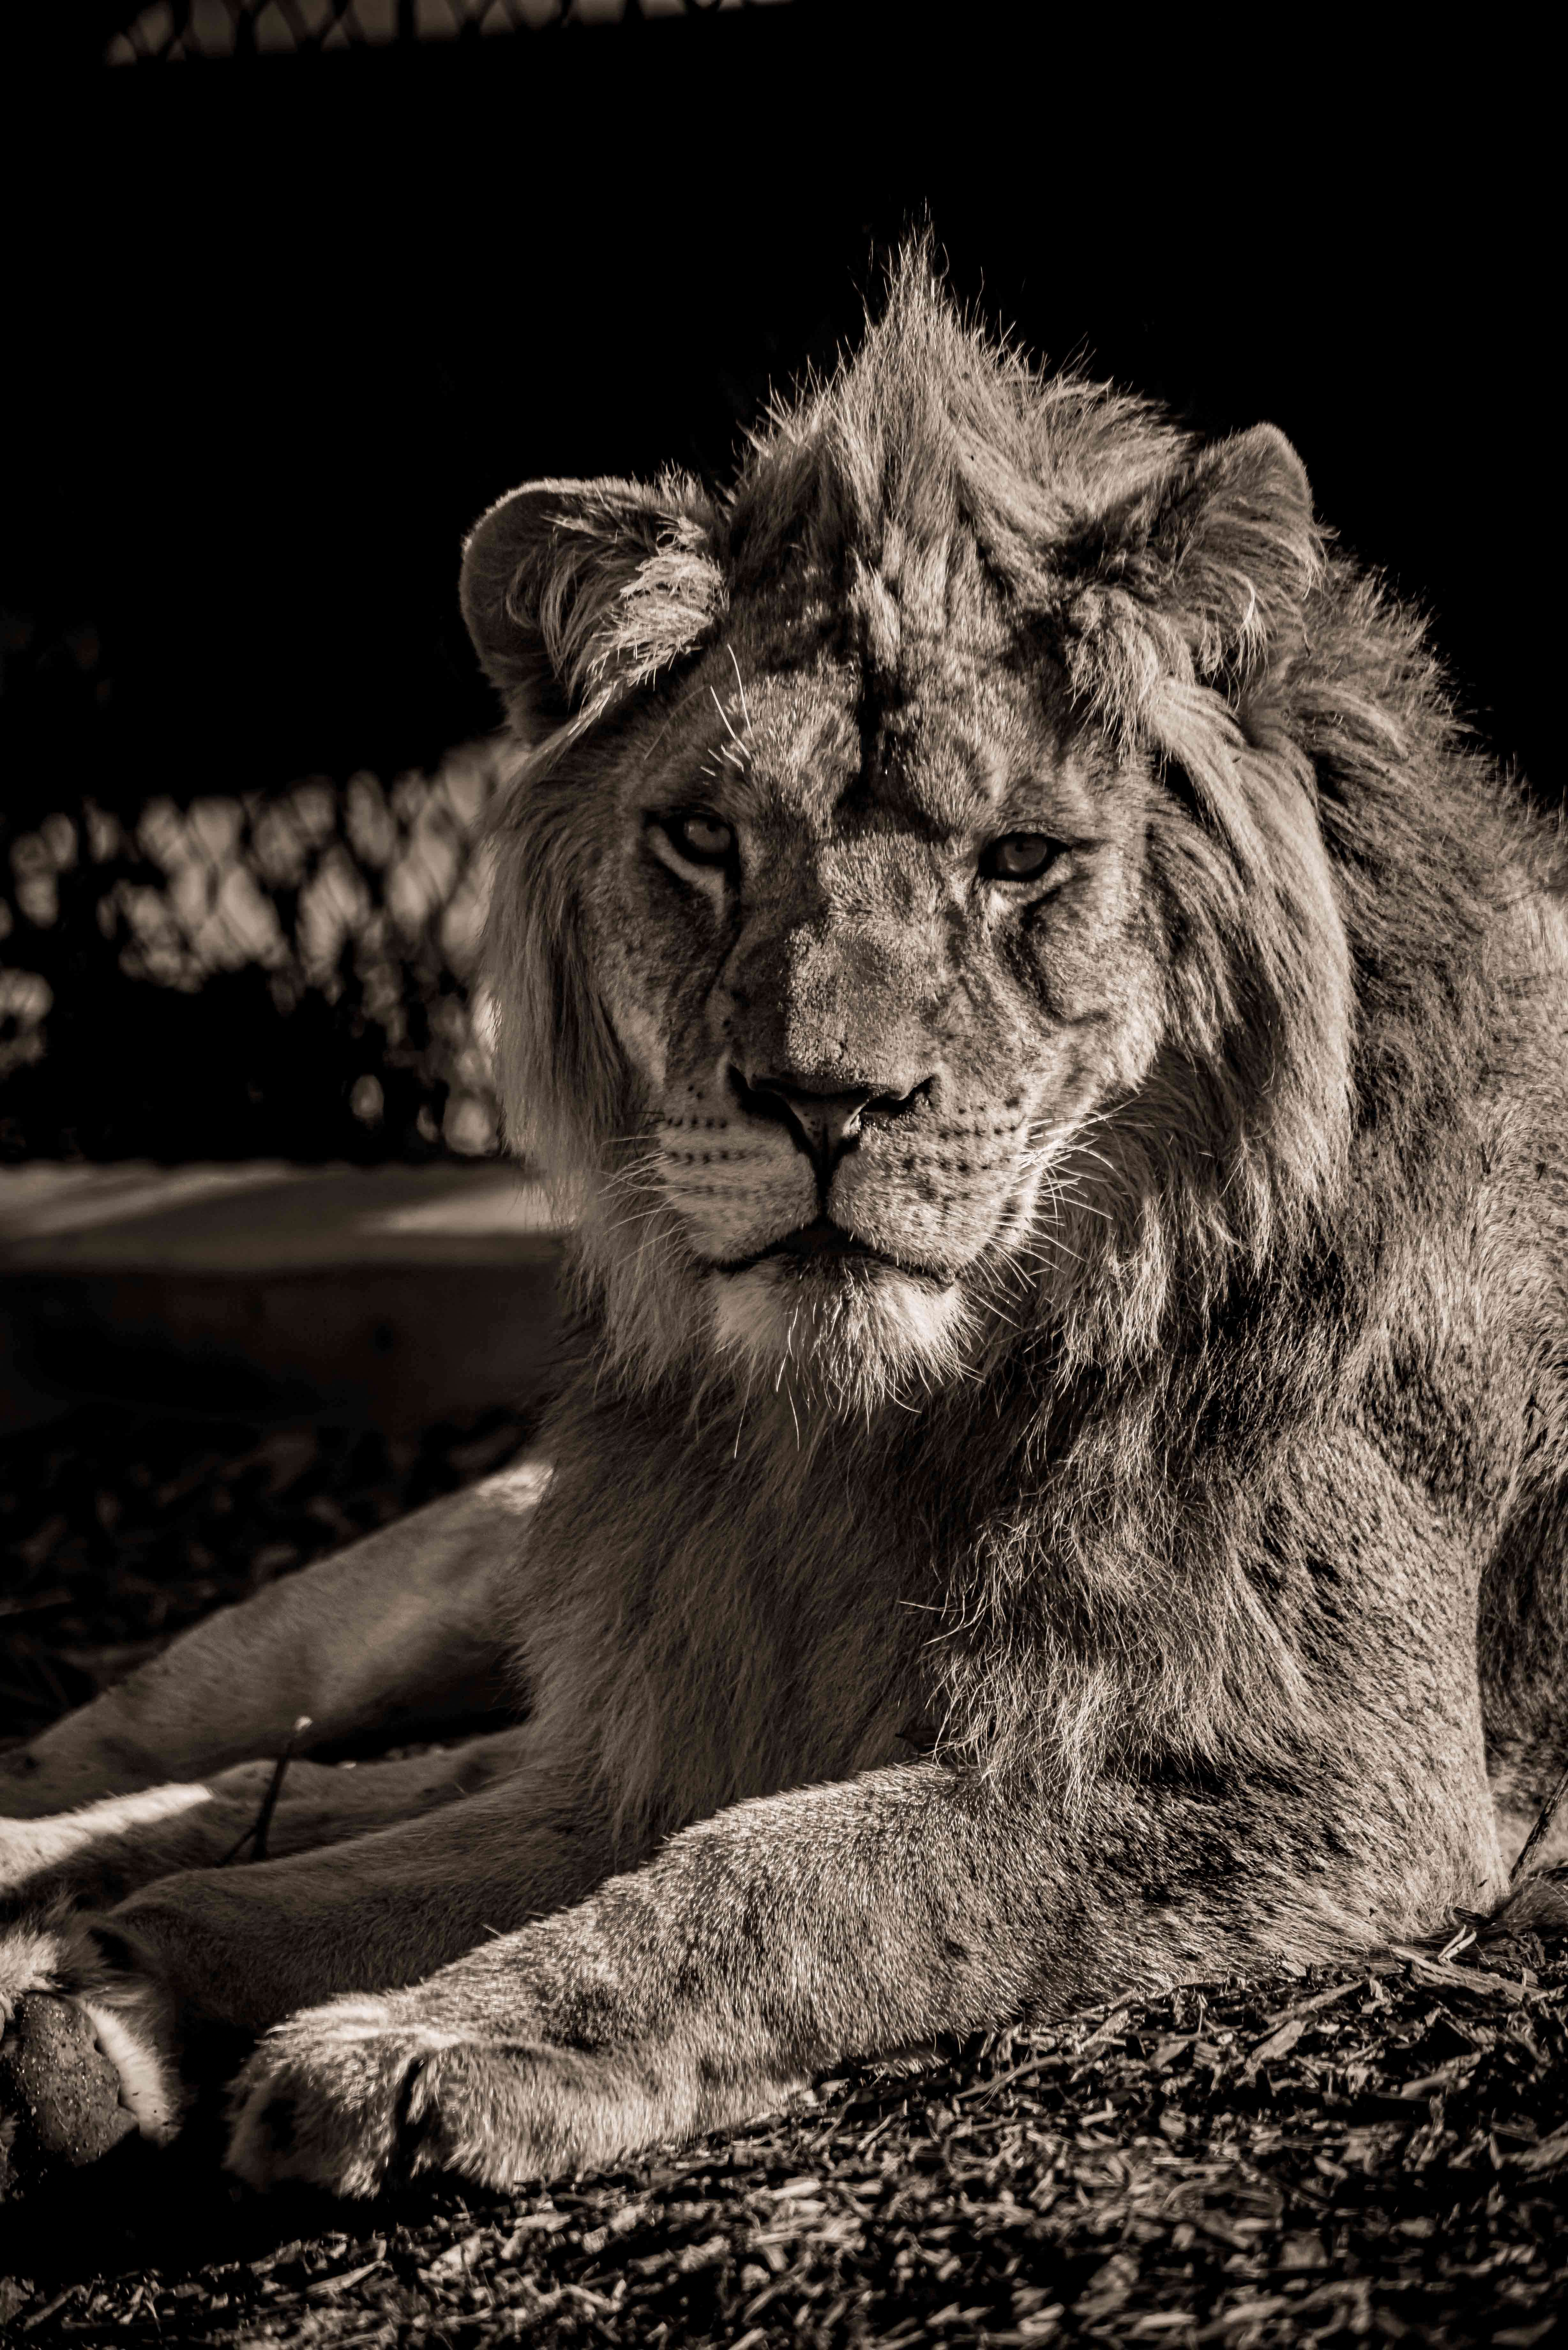 SEMD229 - DSC_7678 Sepia - 
African Savannah Lion, Taronga Zoo,  Sydney, NSW, Australia.
1st July 2020 - 2.41pm
Camera - Nikon D800 
F5.6 - ISO 800 - 1/1250 second - Focal Length 250mm